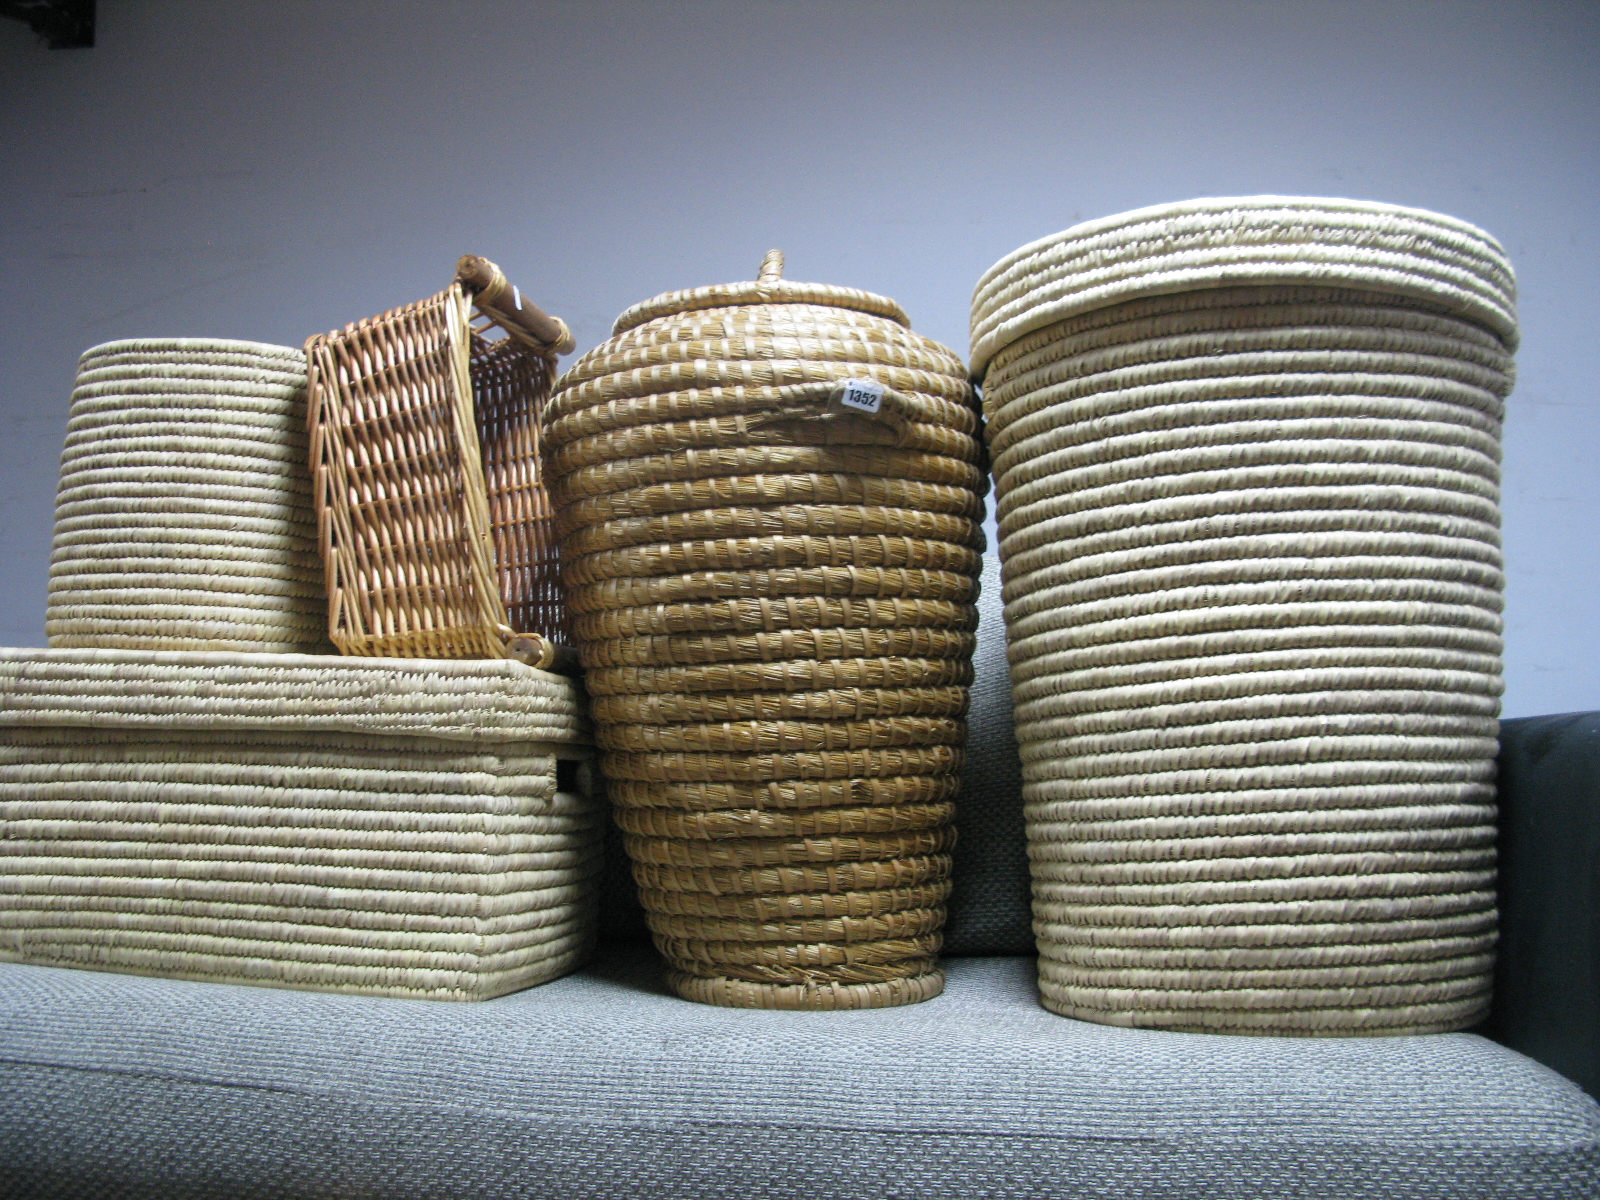 Ali Baba Basket; together with other baskets. (5)